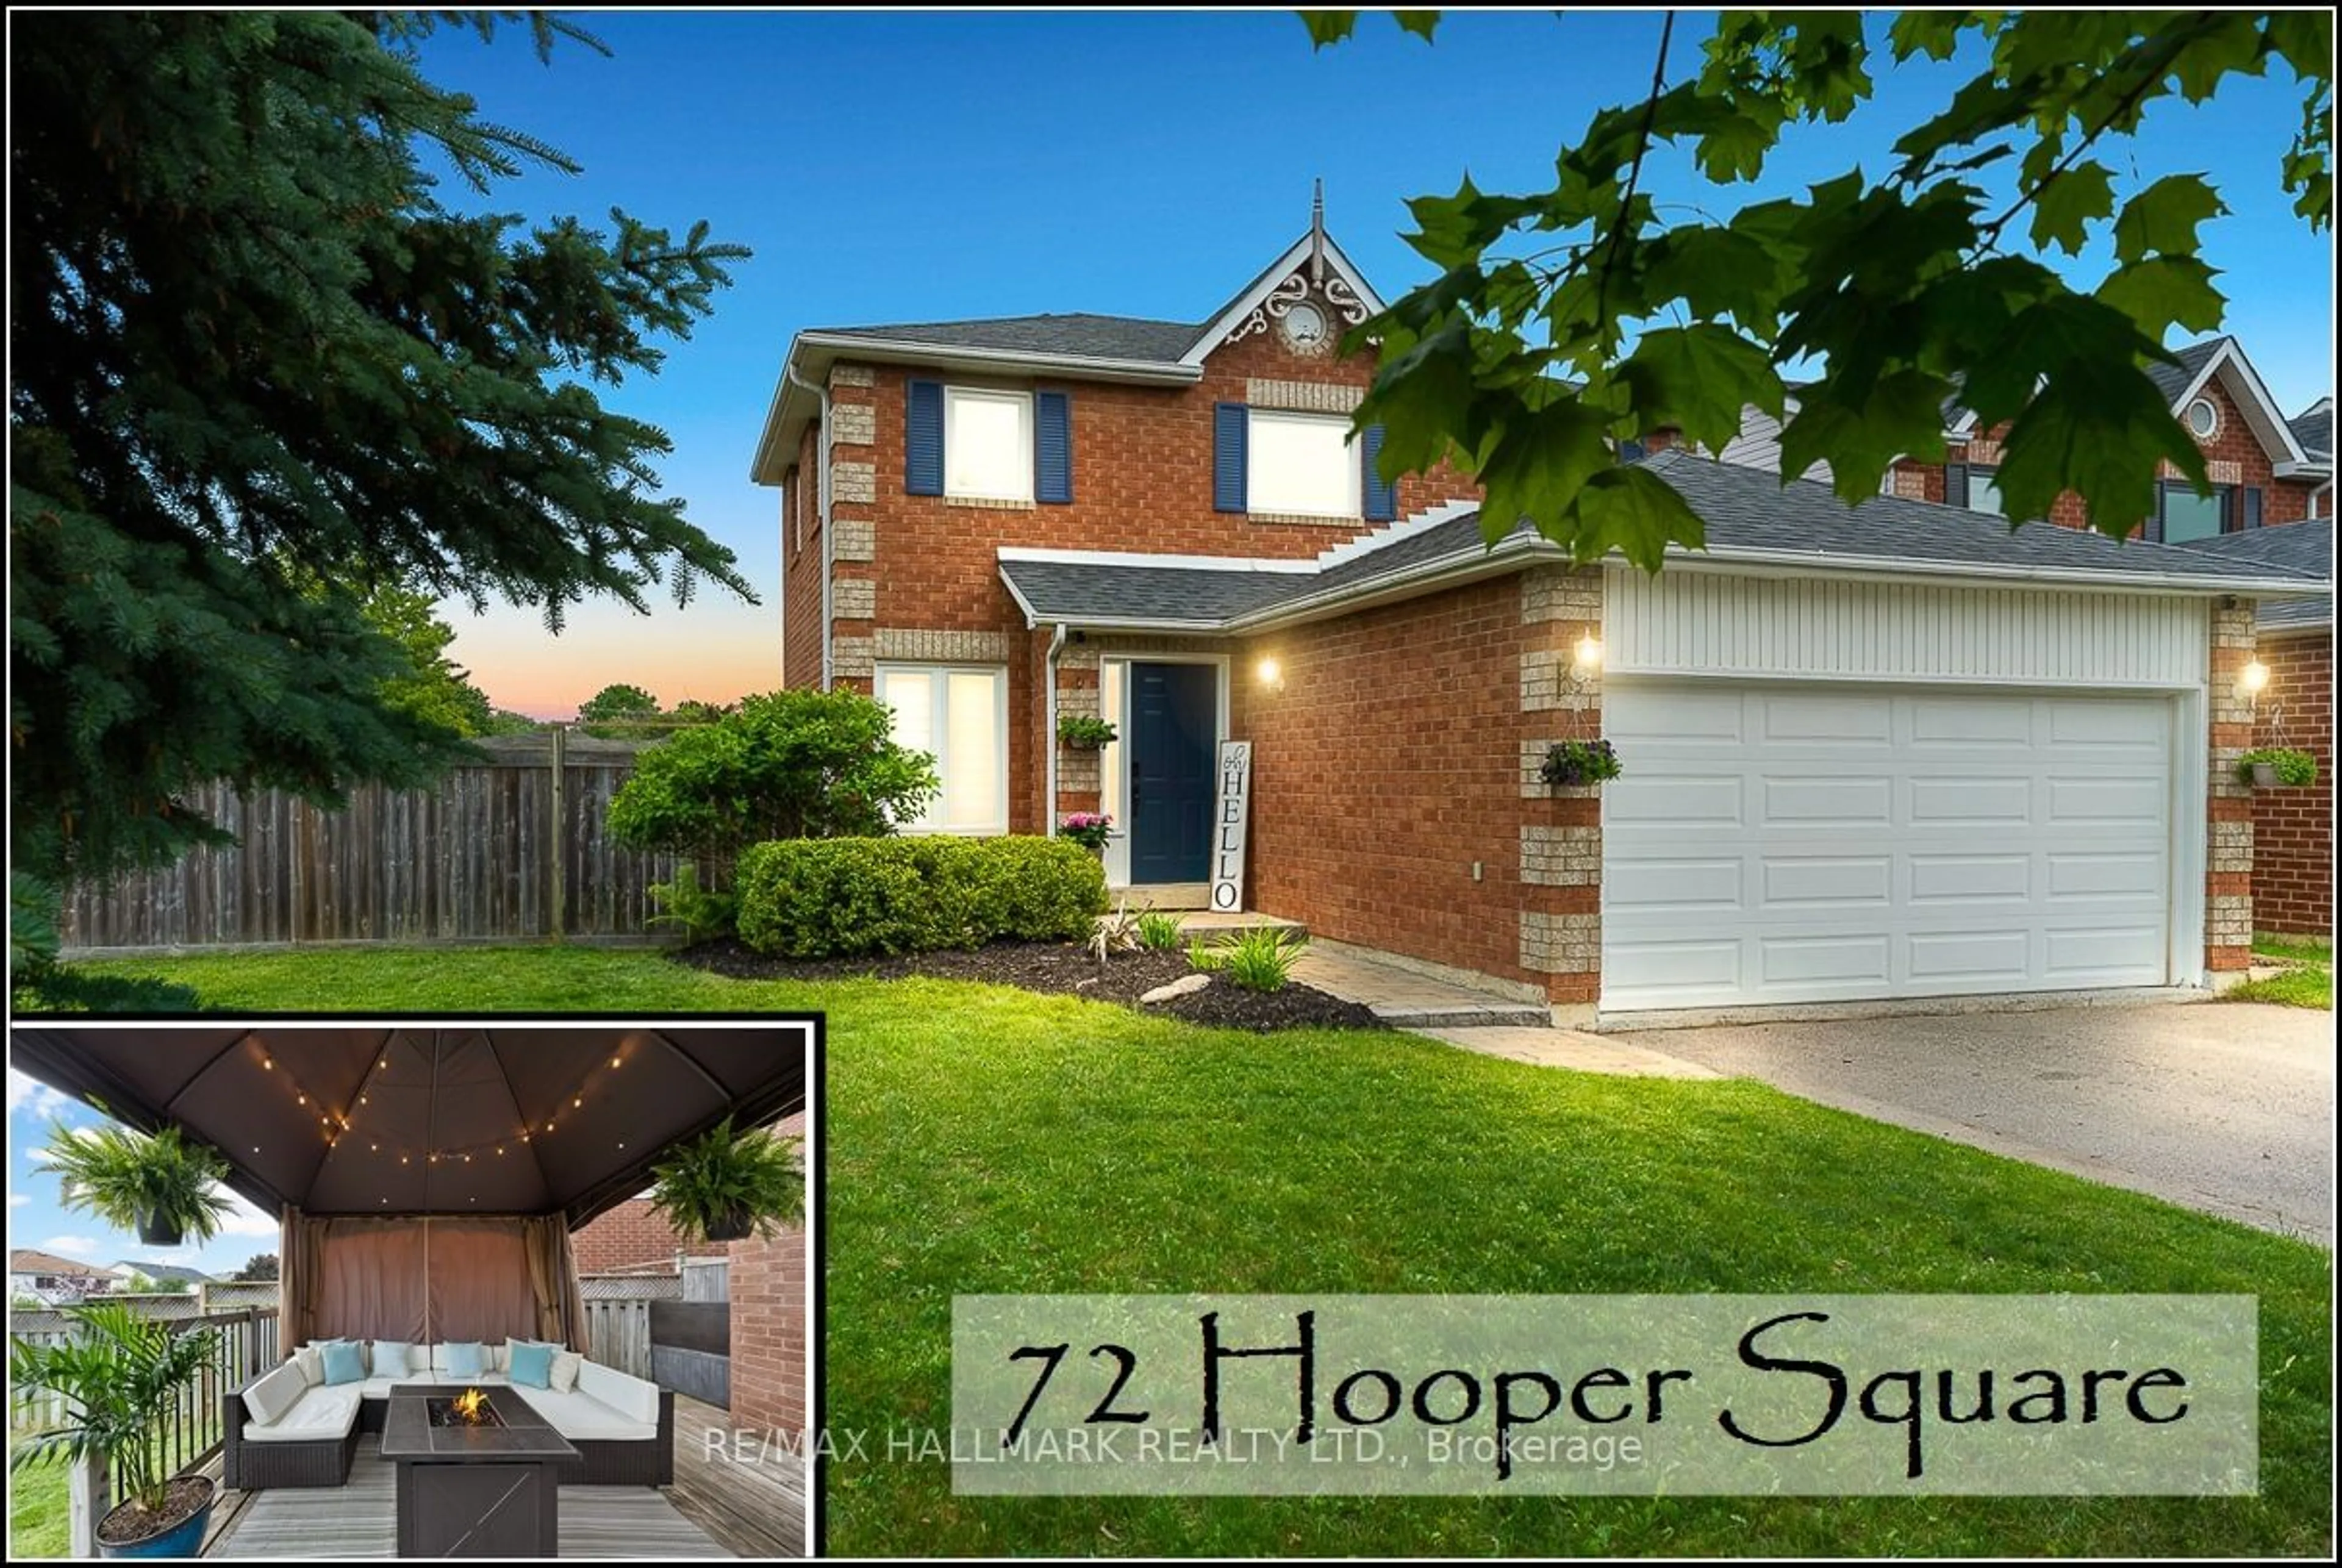 Home with brick exterior material for 72 Hooper Sq, Clarington Ontario L1C 4X8